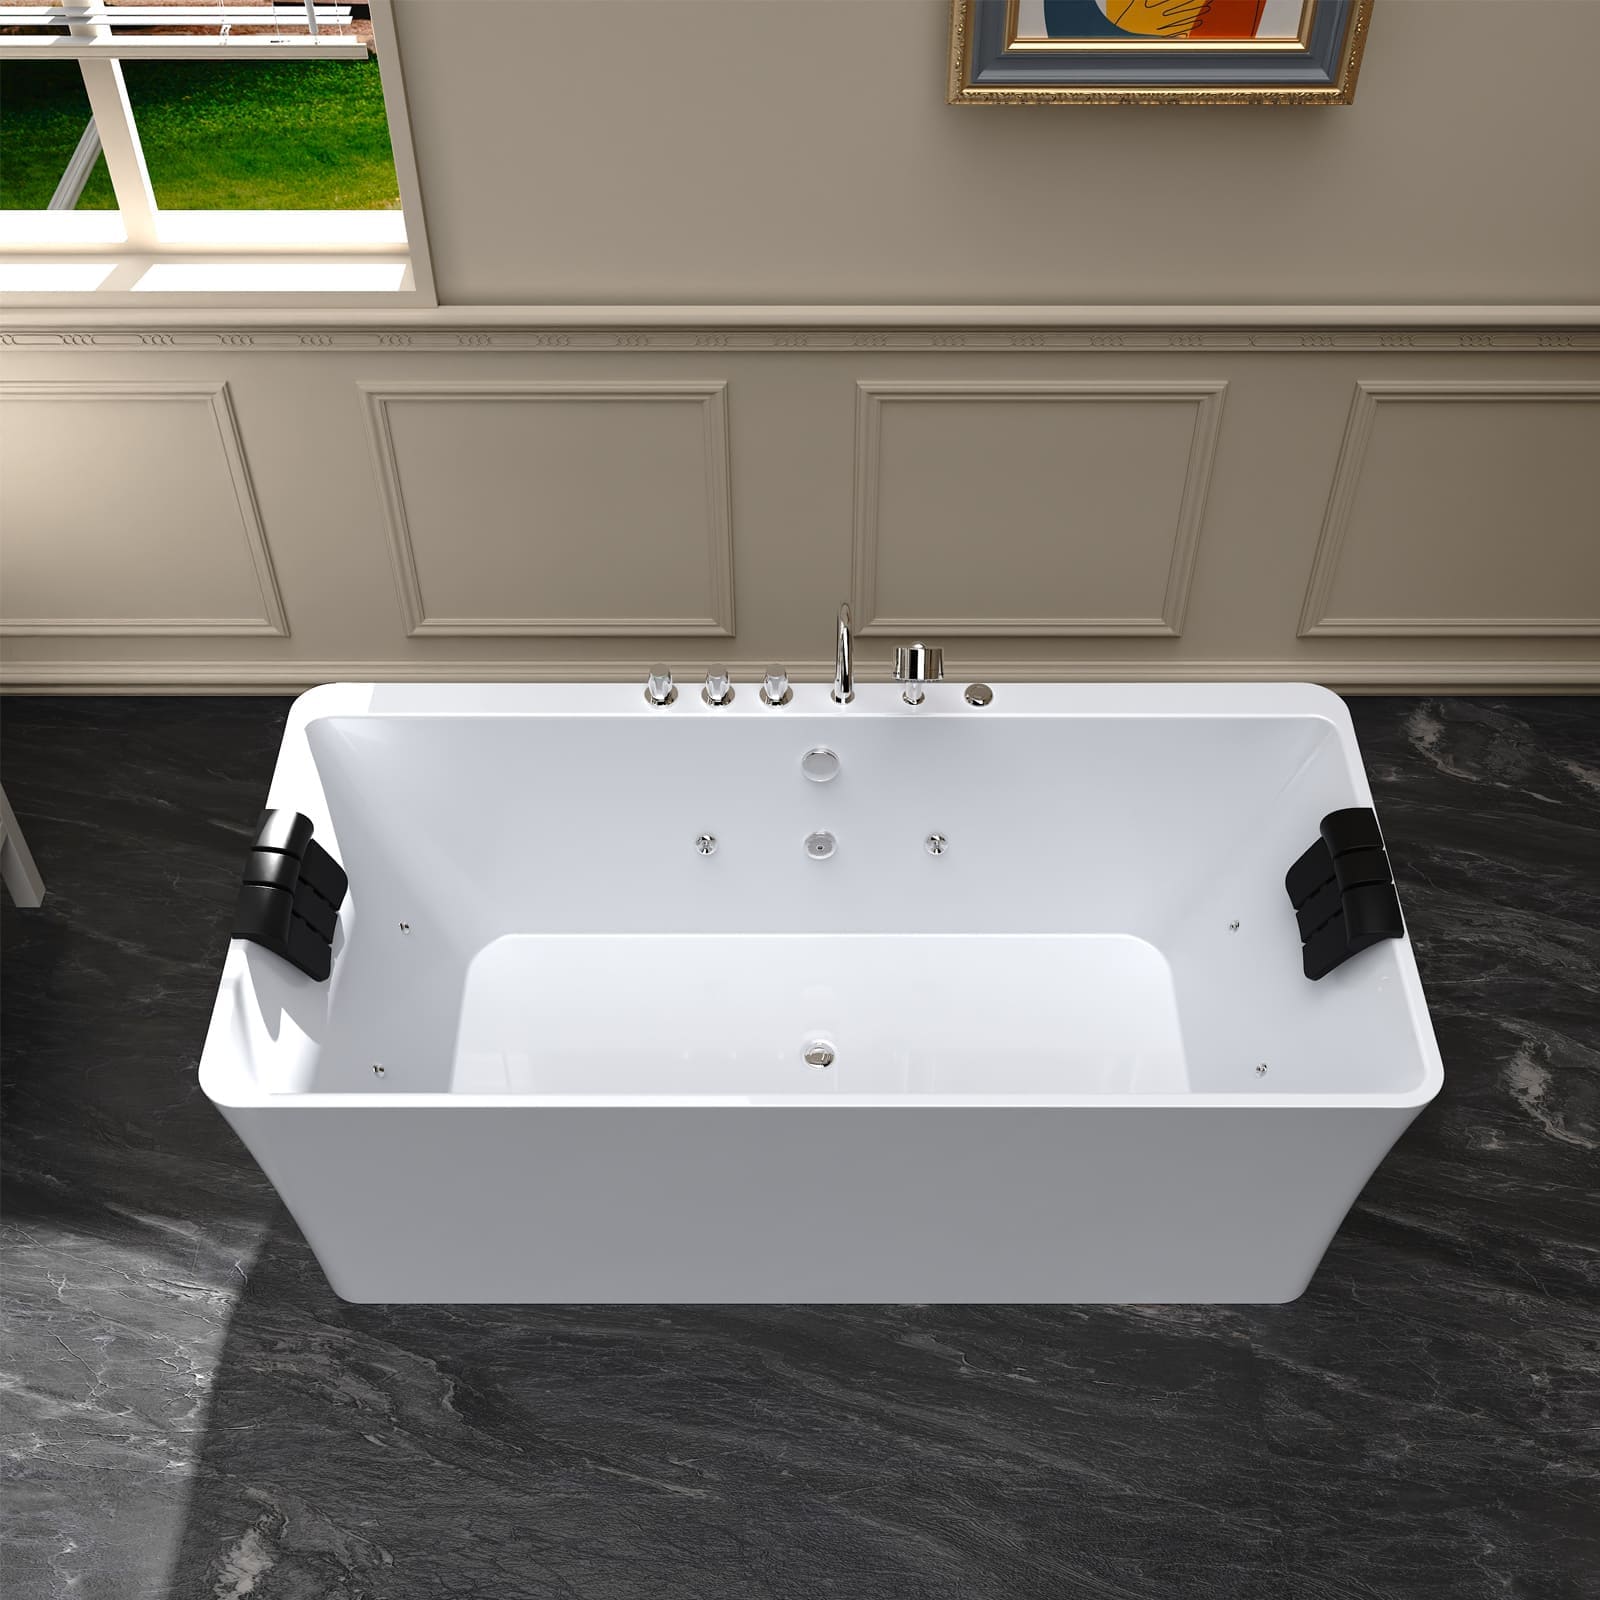 Empava-67AIS03 whirlpool acrylic hydromassage rectangular double-ended bathtub top view